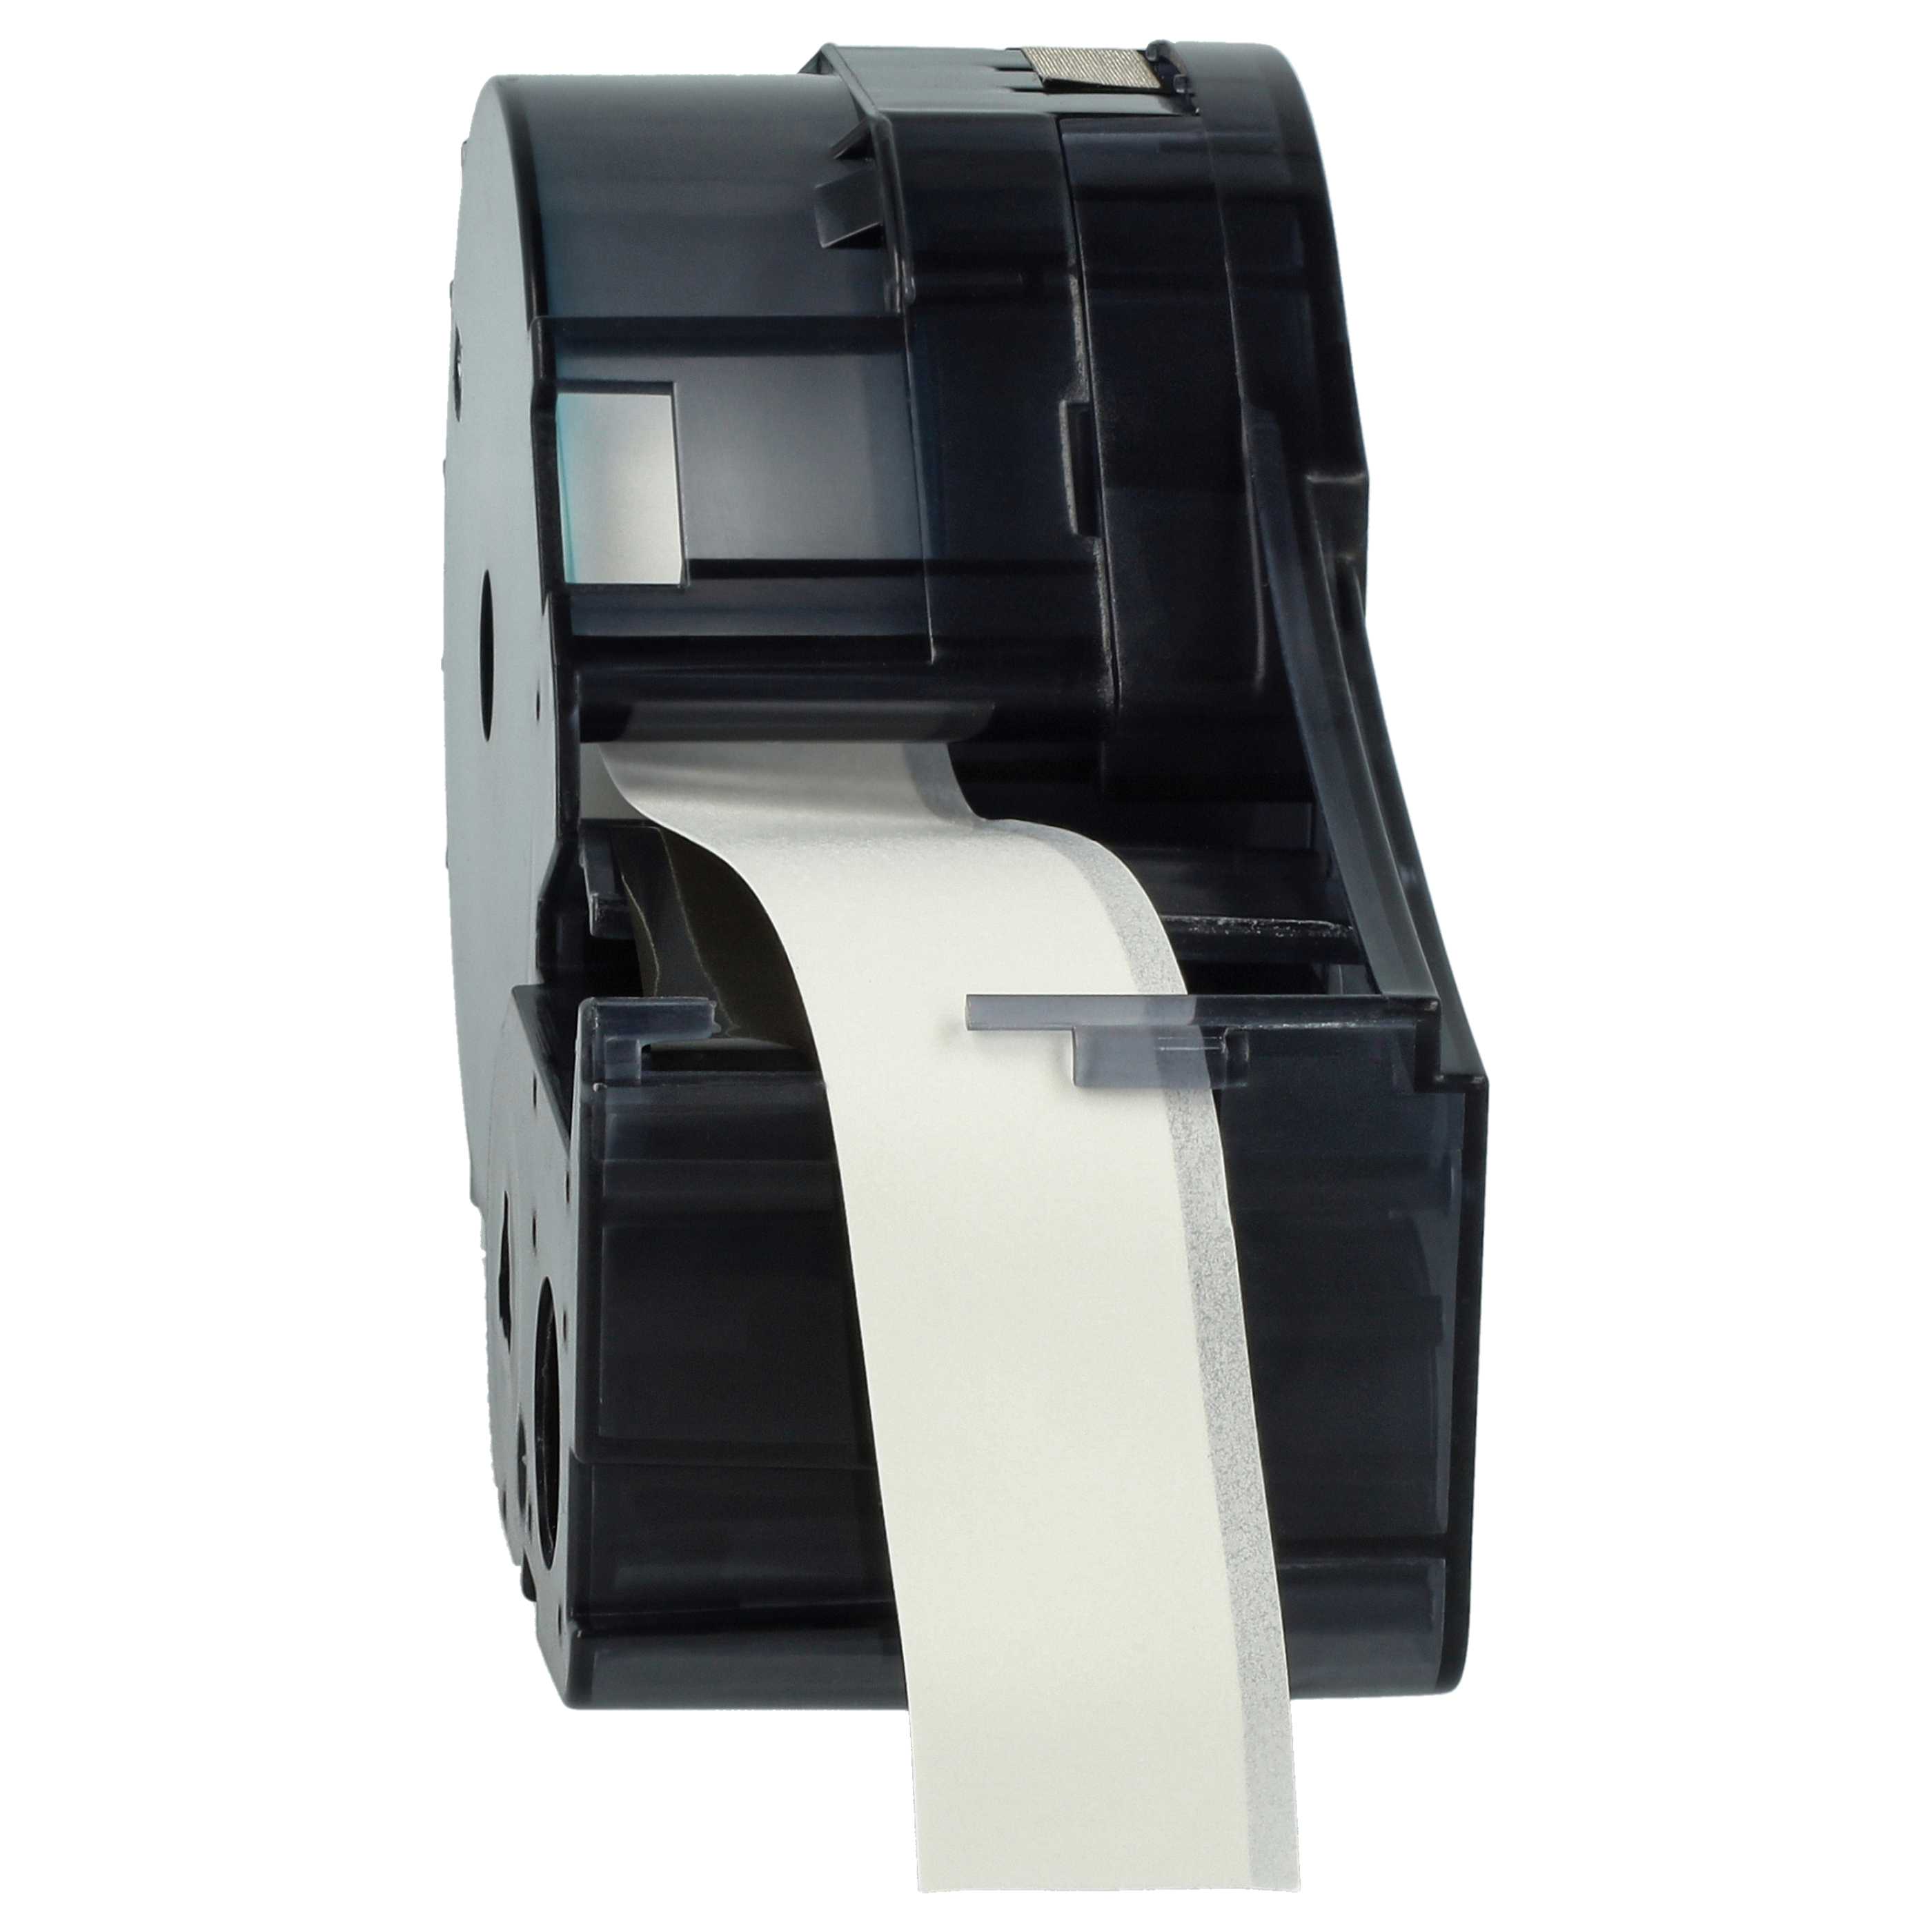 5x Casete cinta escritura reemplaza Brady M21-500-595-WT Negro su Blanco